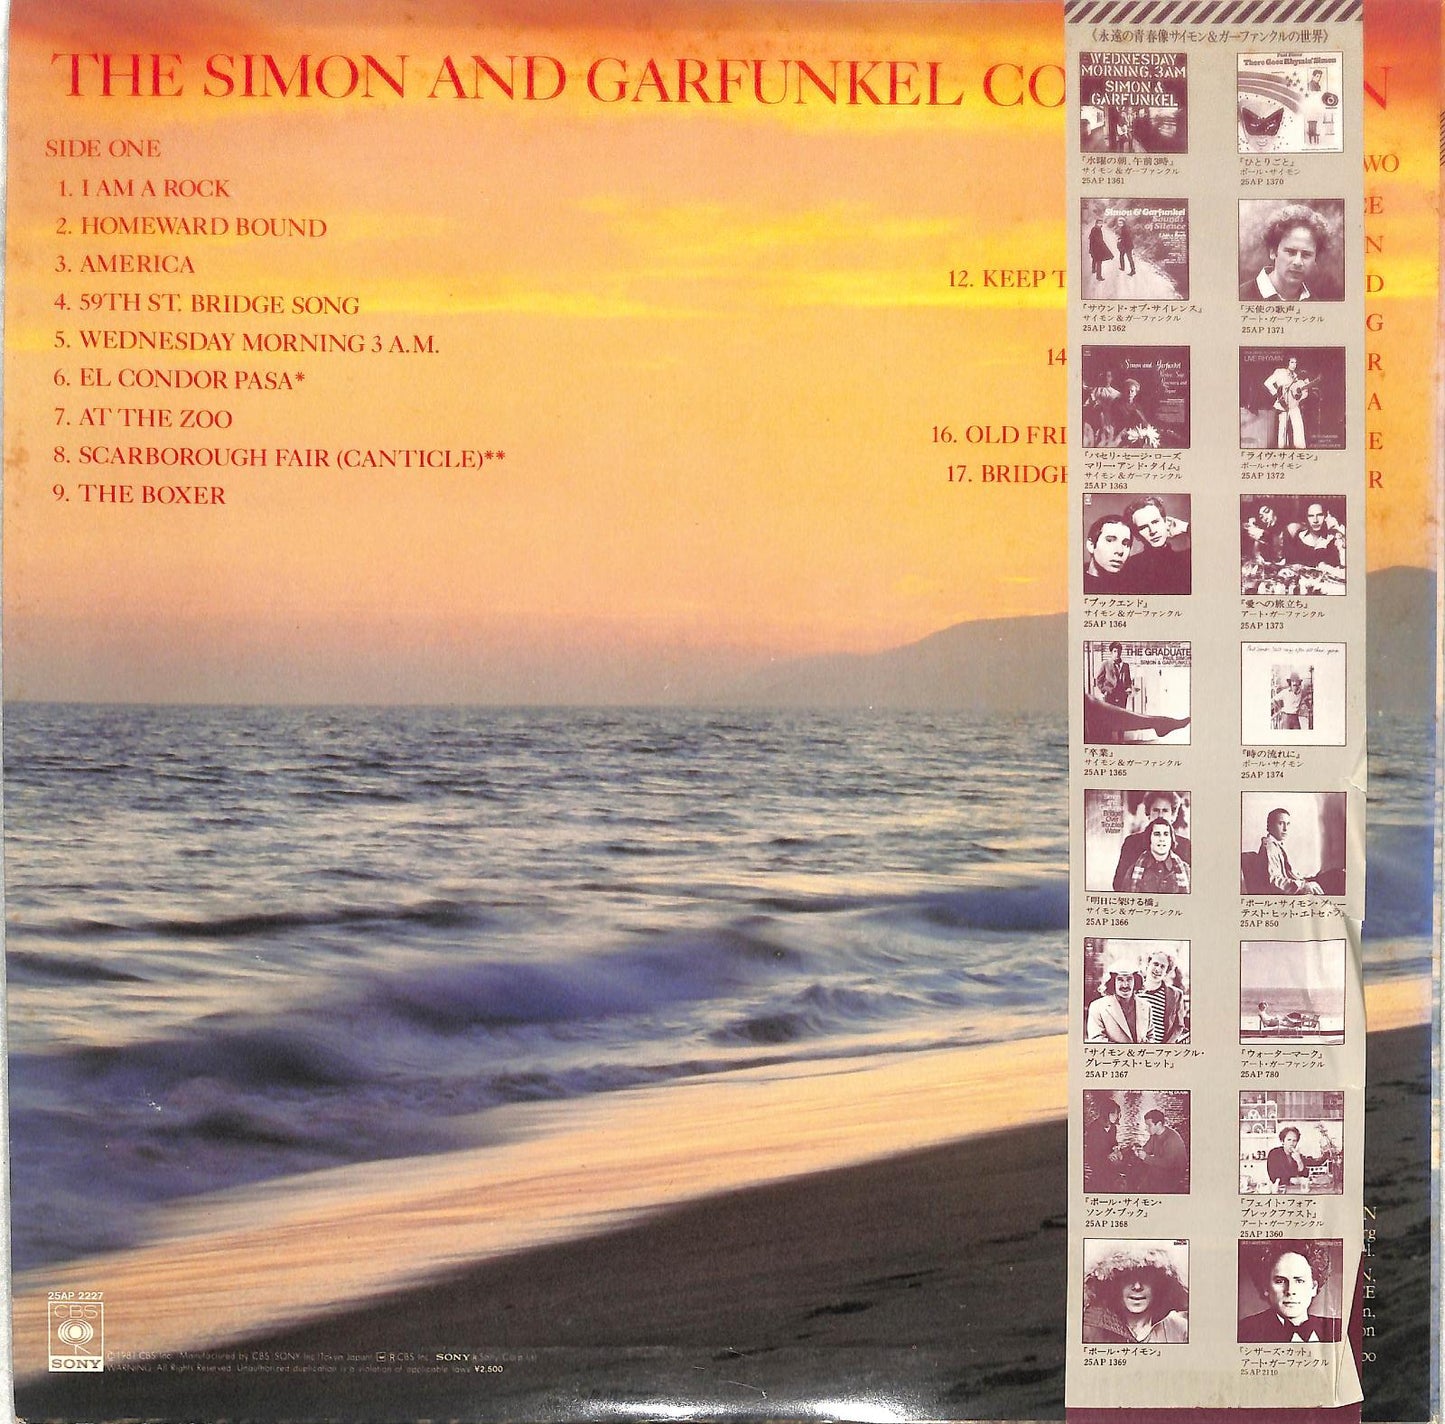 SIMON AND GARFUNKEL - The Simon And Garfunkel Collection